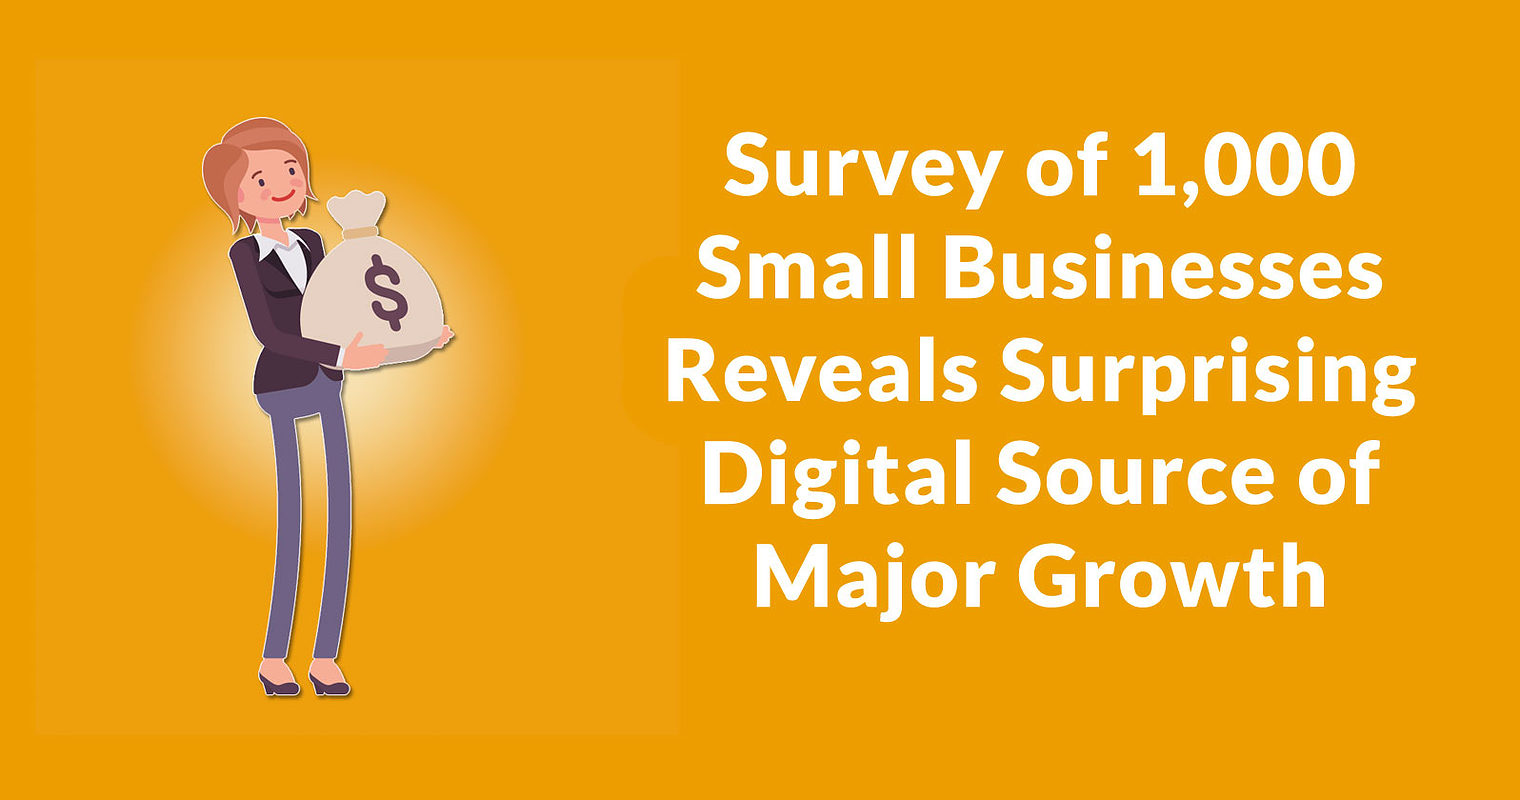 Survey of 1,000 Small Businesses Reveals Surprising Digital Marketing Trend